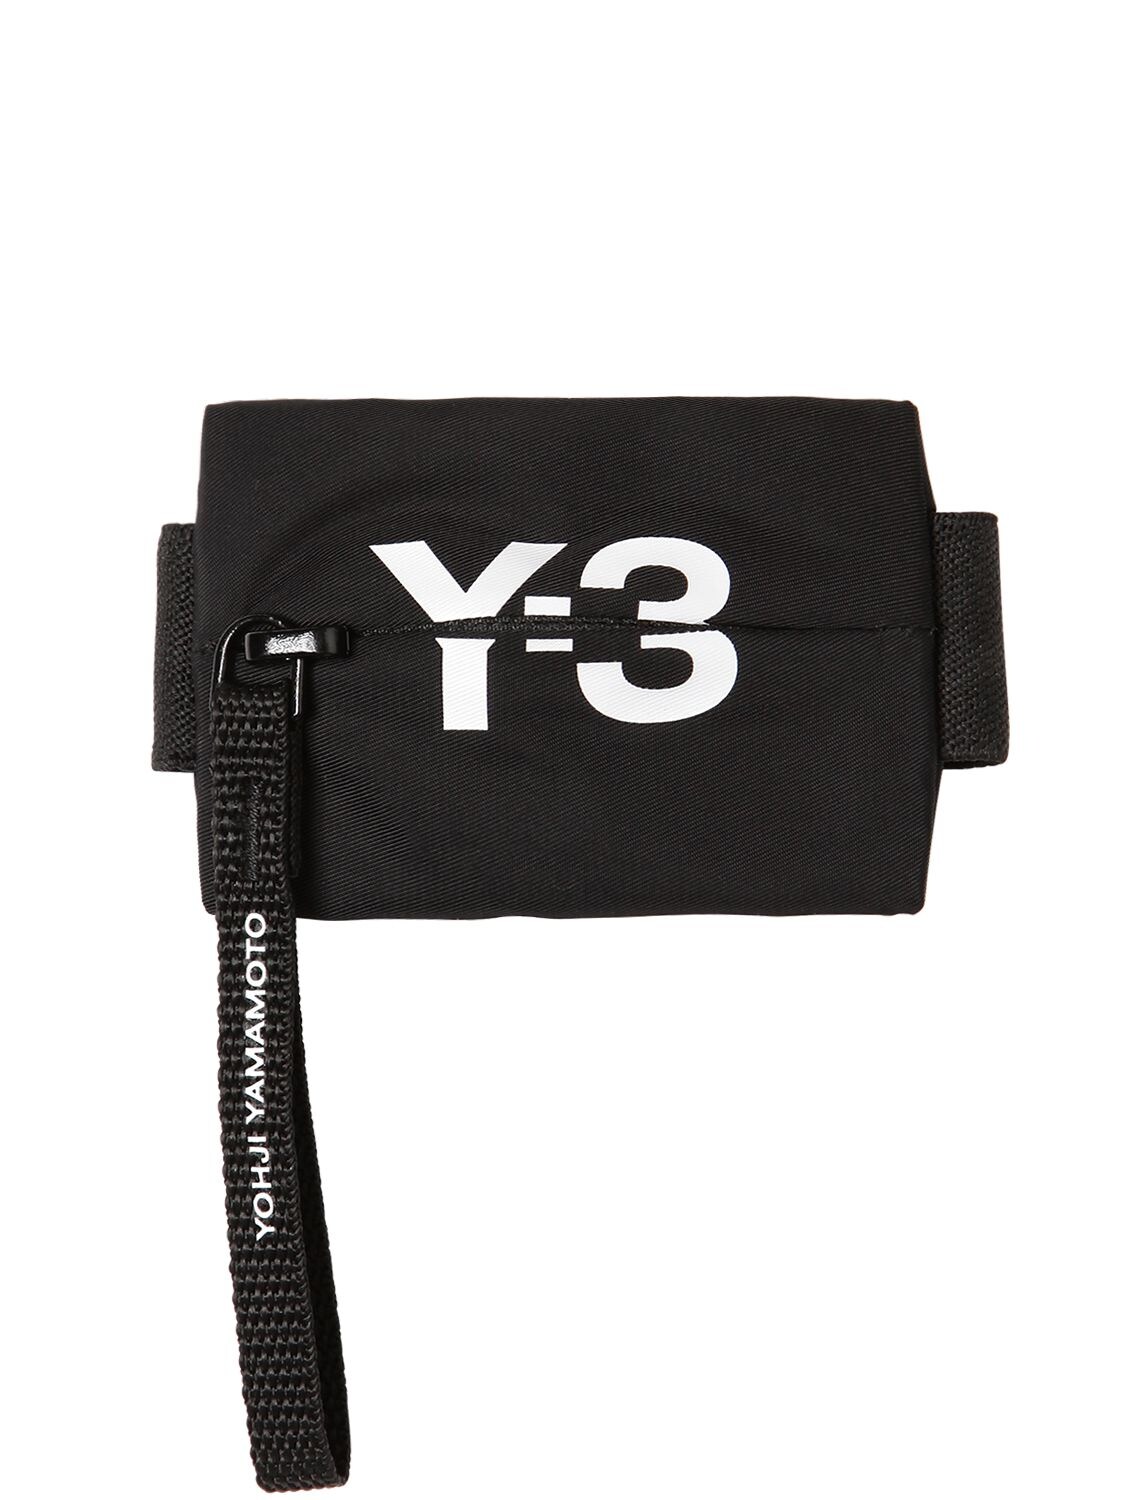 y3 mini wrist pouch